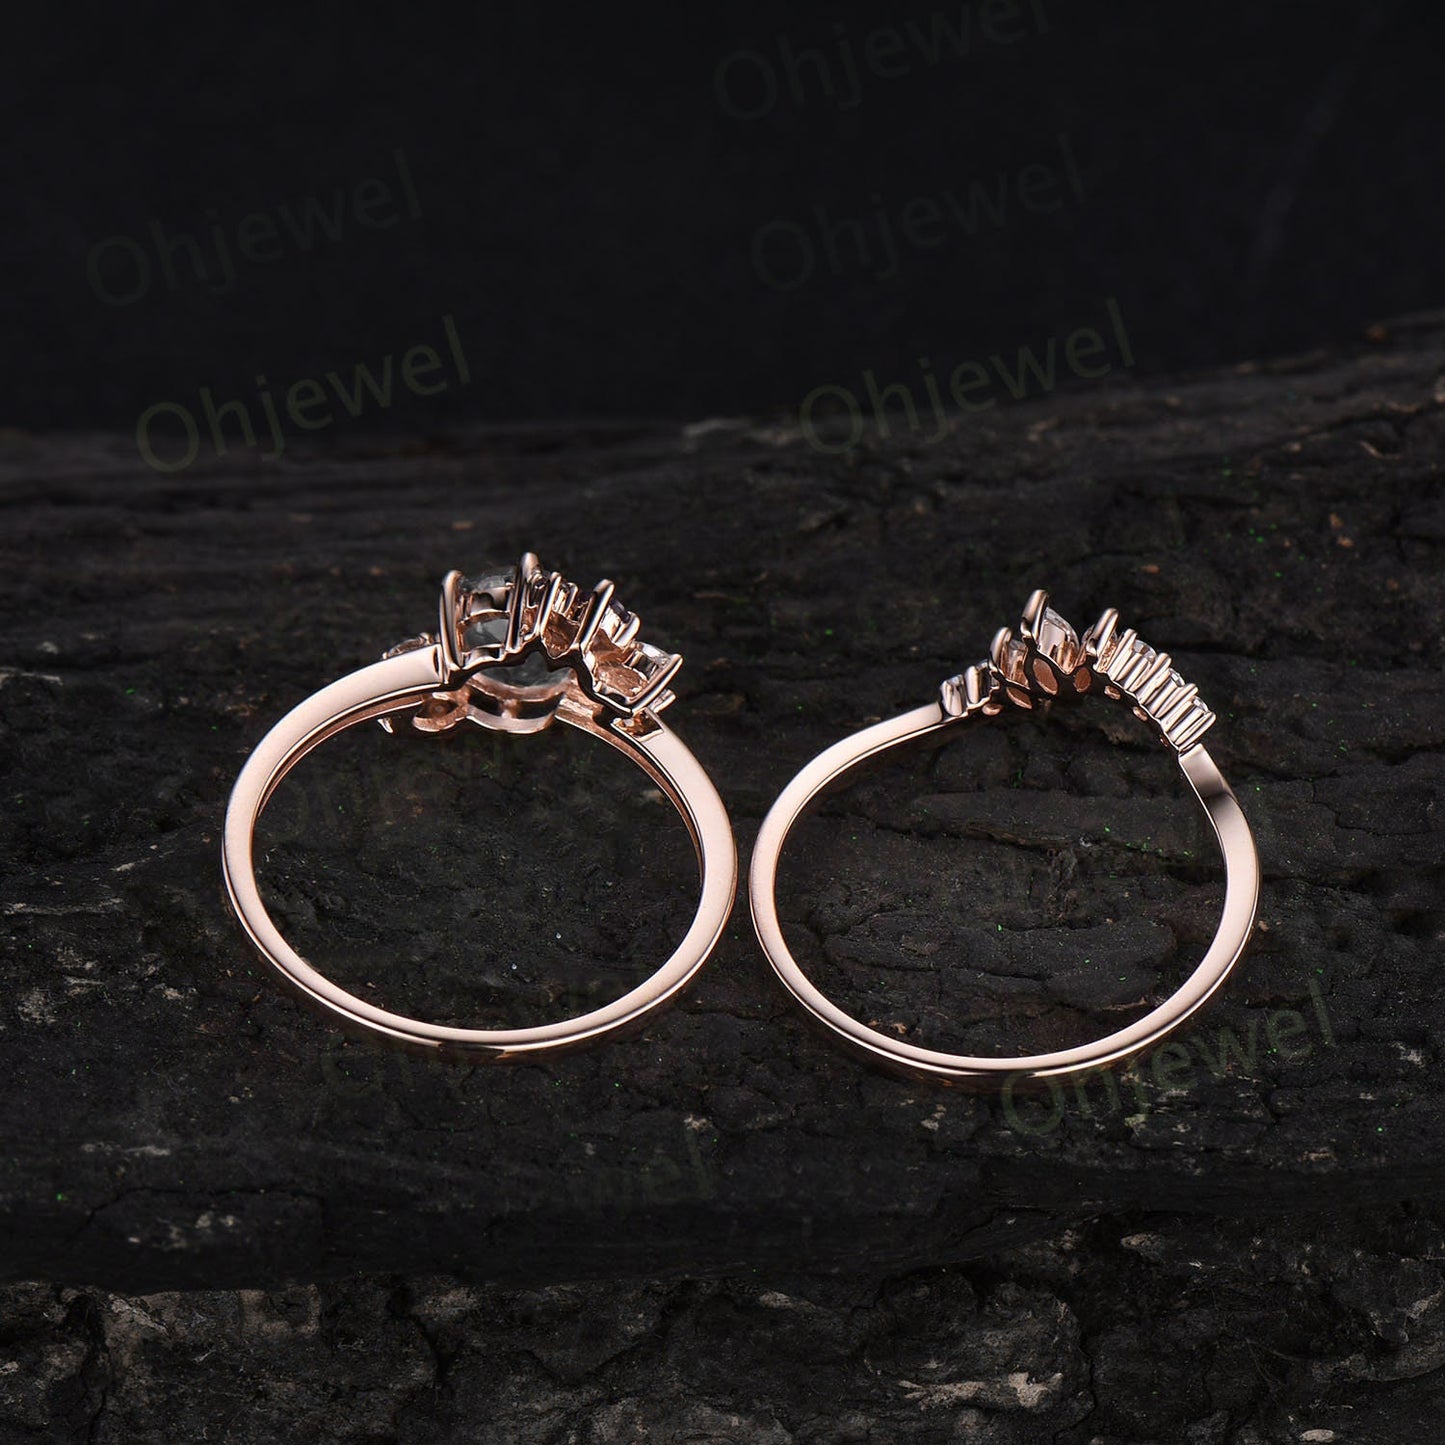 Vintage round cut blue sandstone engagement ring set rose gold silver cluster moissanite ring set black diamond wedding ring set for women